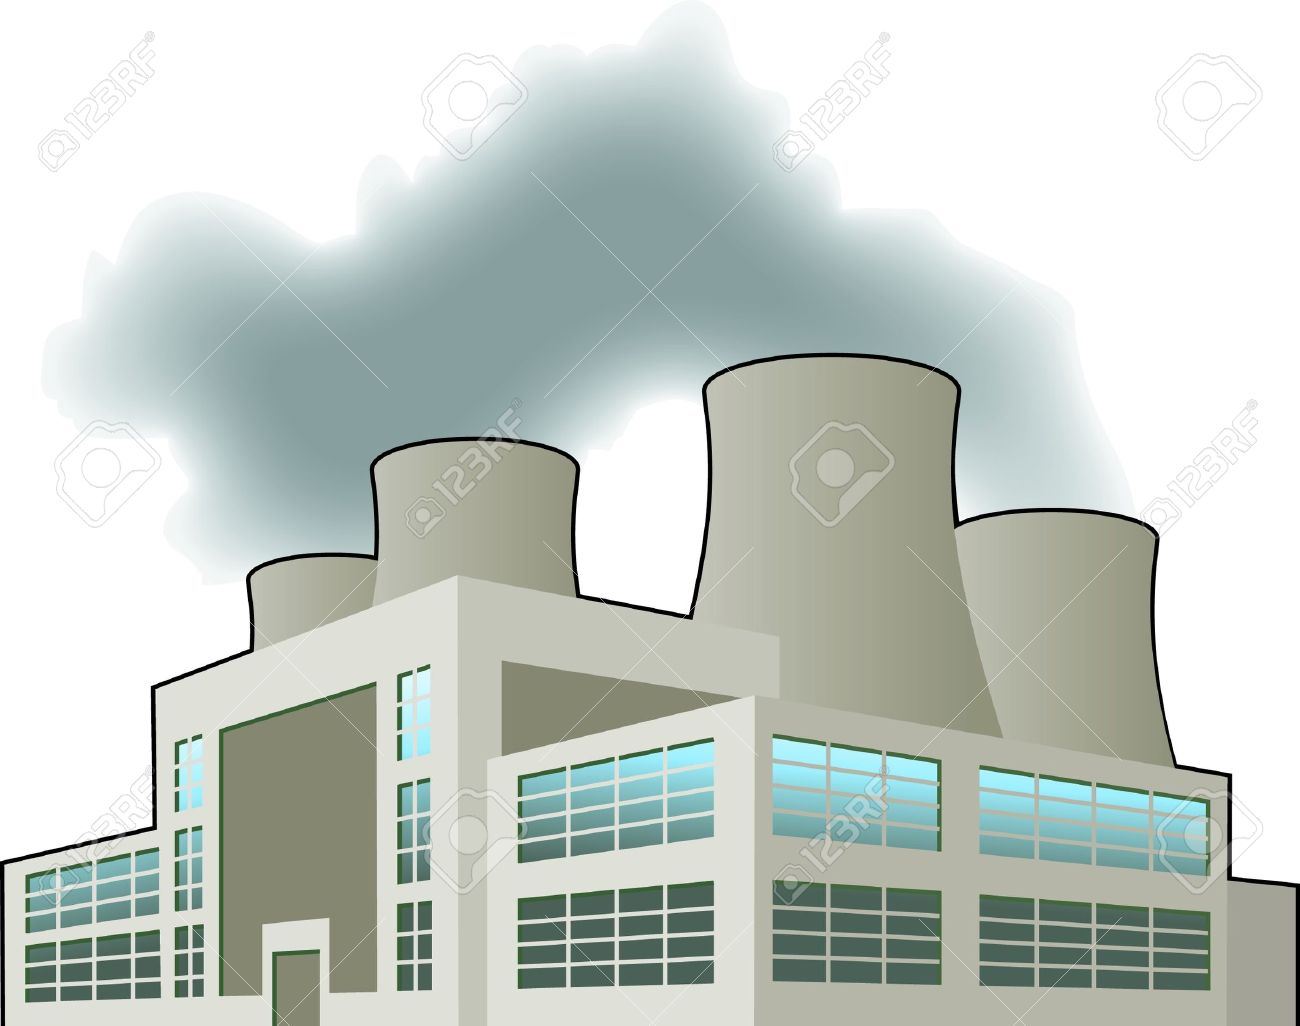 clip art of power plant - photo #5